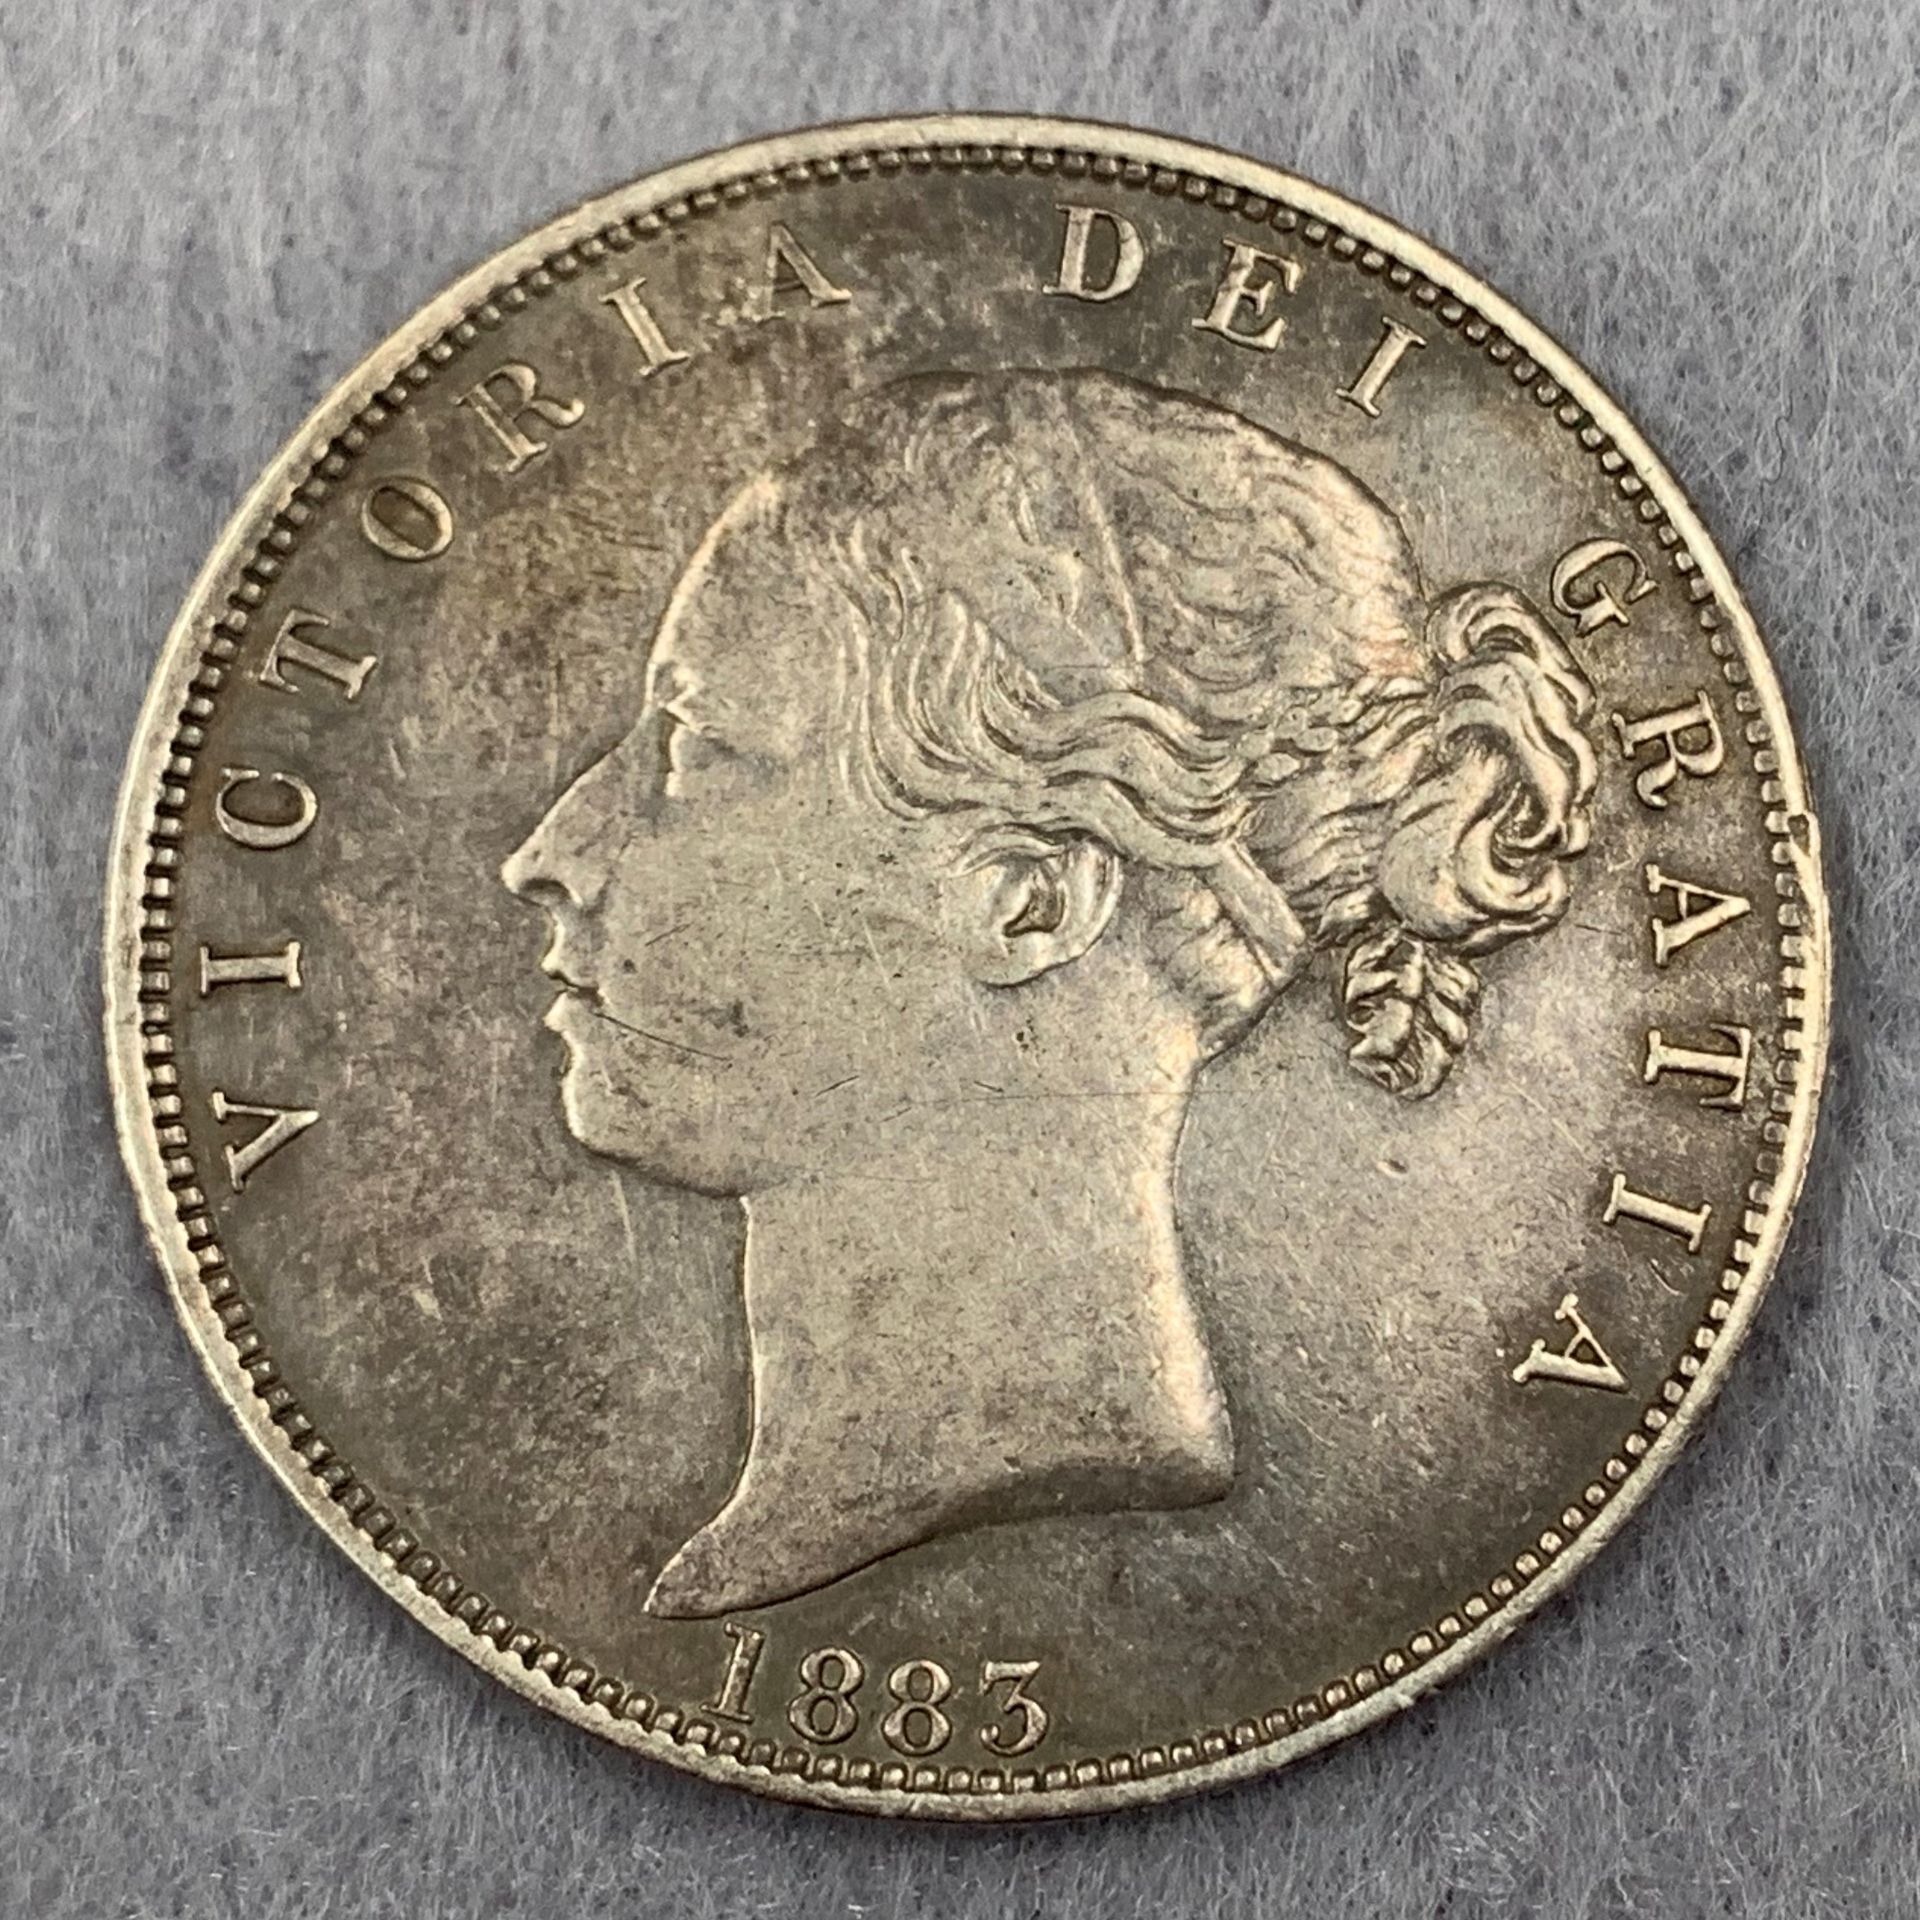 An 1883 Young Head Victoria silver half crown